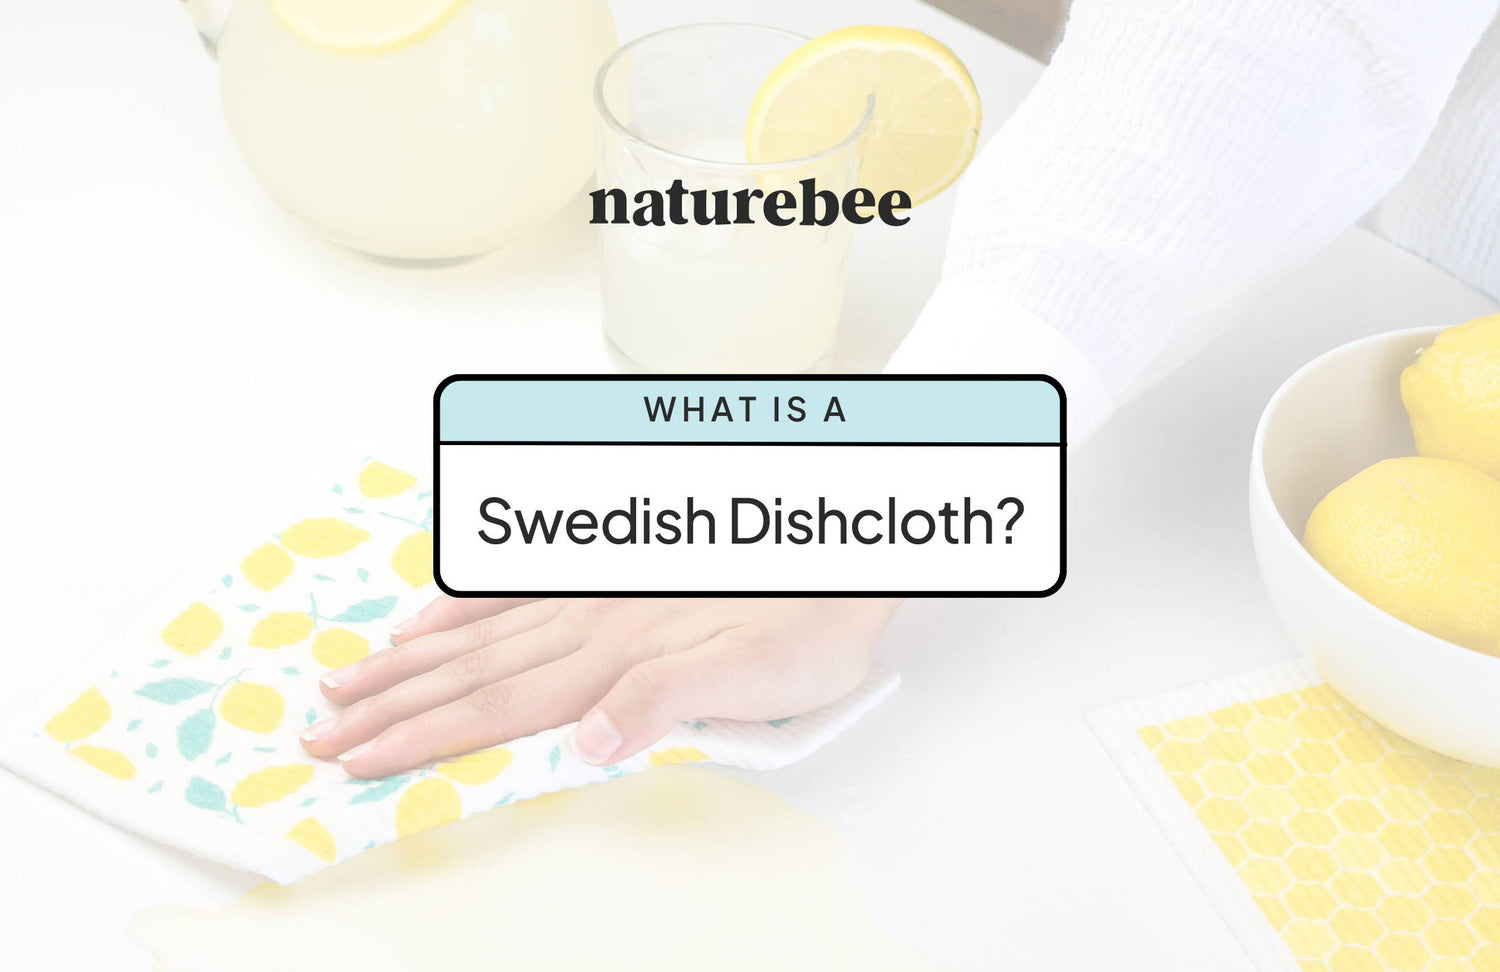 What is a Swedish Dishcloth?